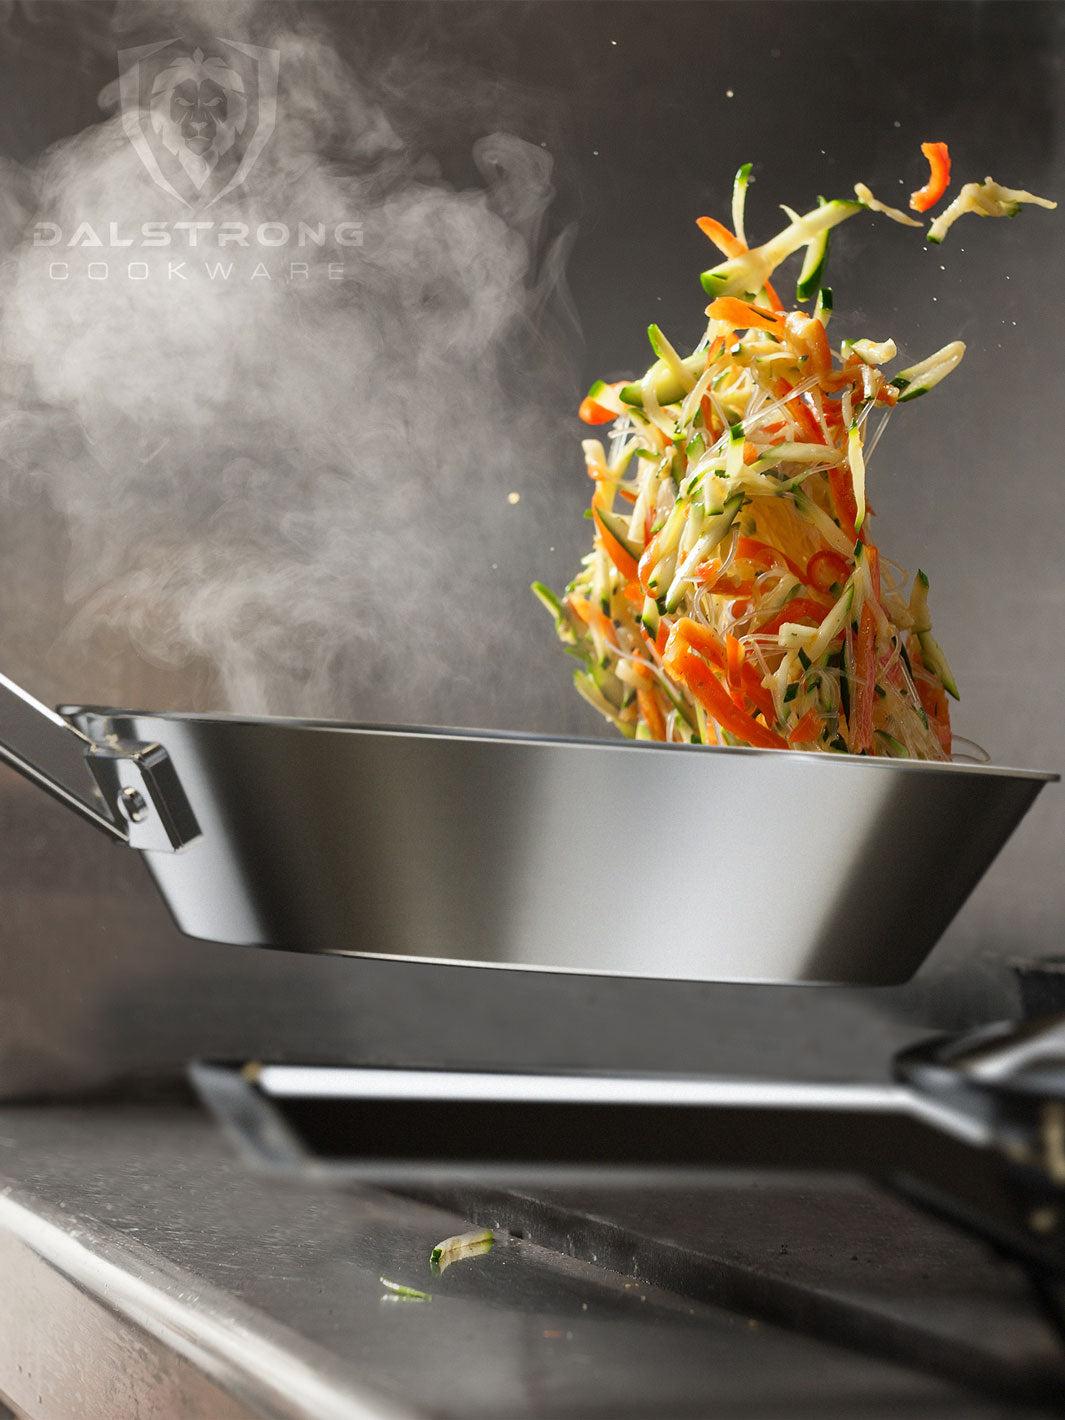 12 Piece Cookware Set | Oberon Series | Dalstrong ©